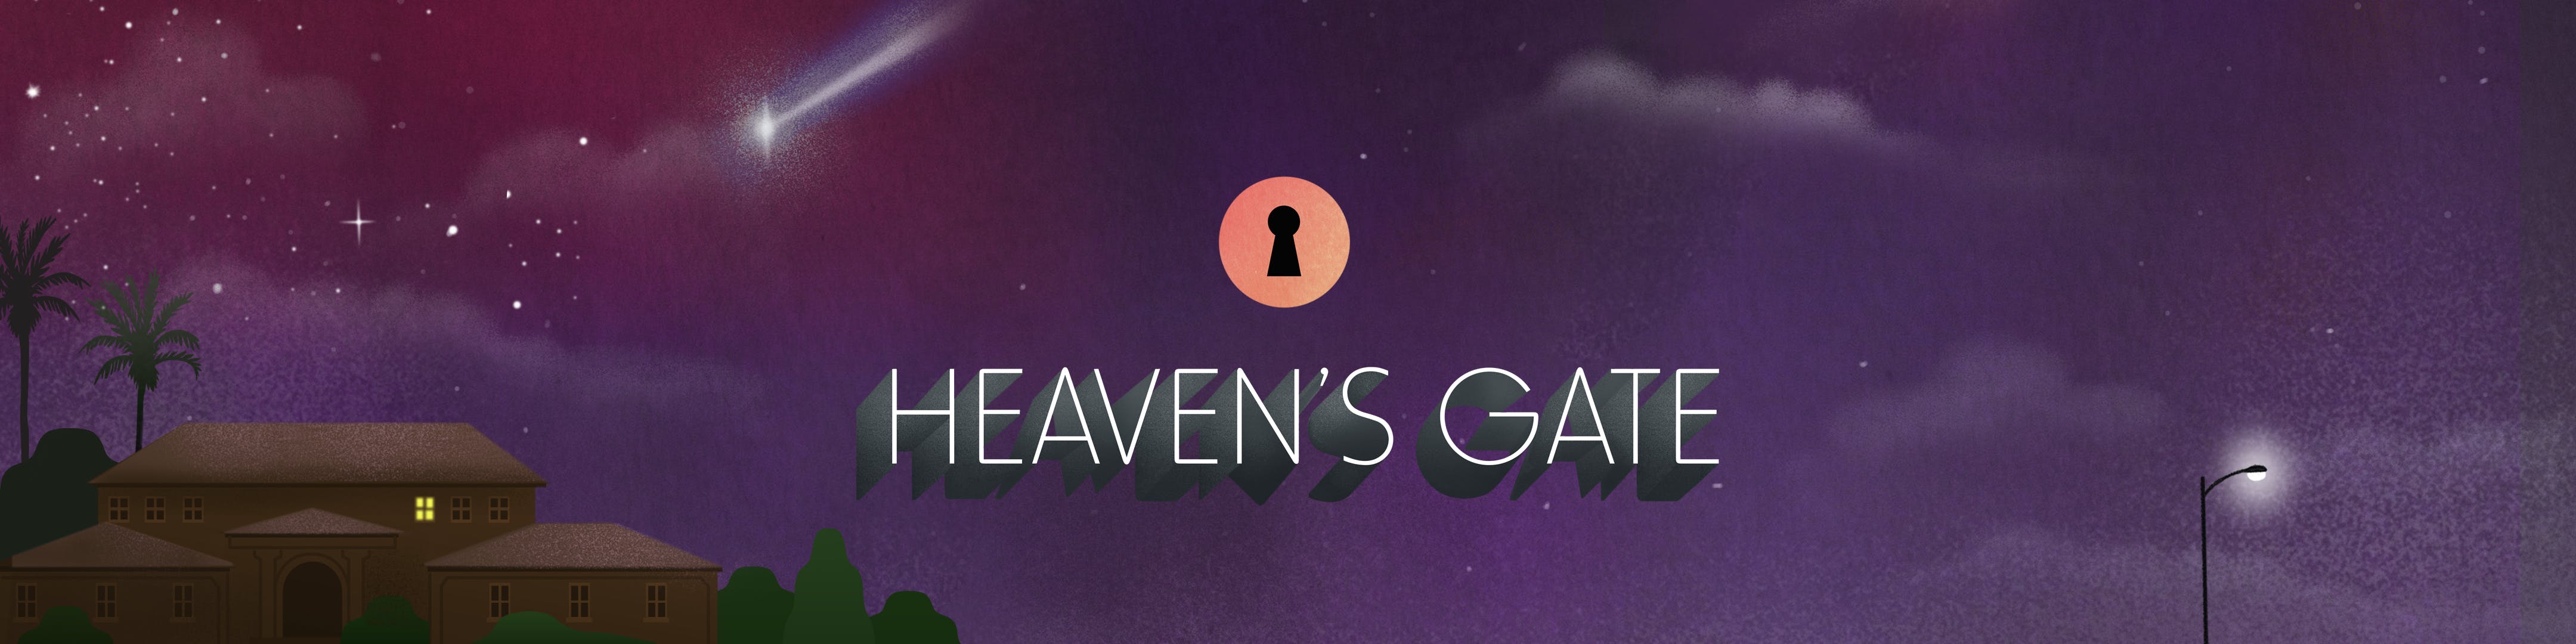 Heaven's Gate Podcast media 1